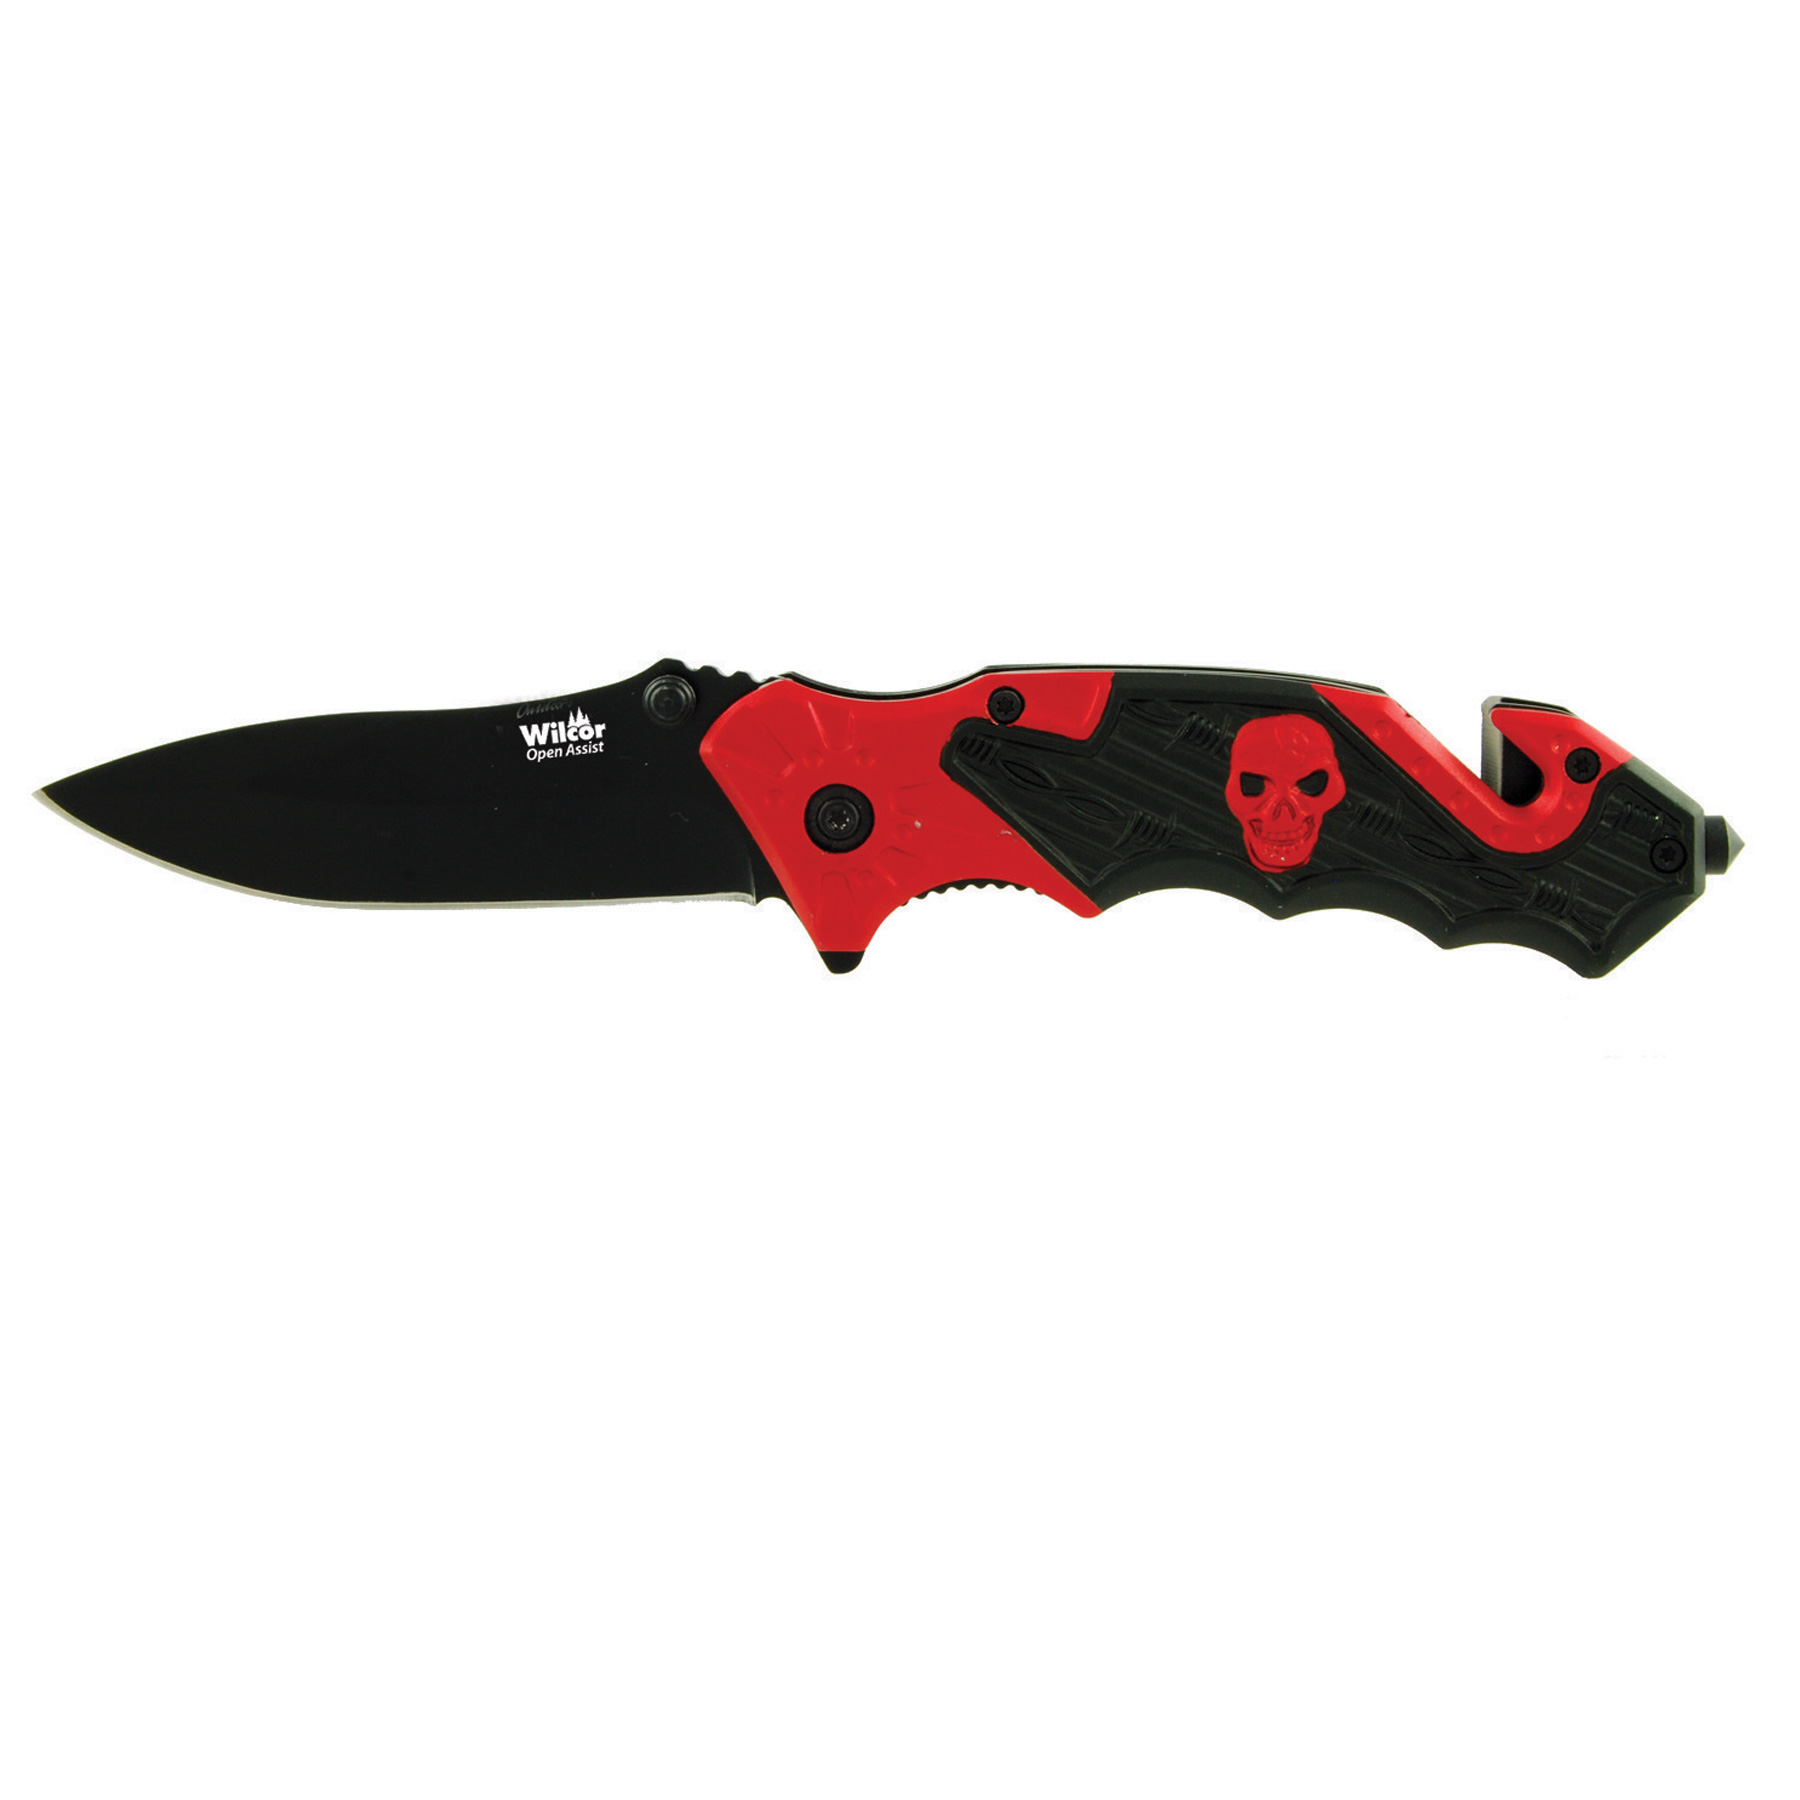 KNIFE OPEN ASSIST RED SKULL 4.75